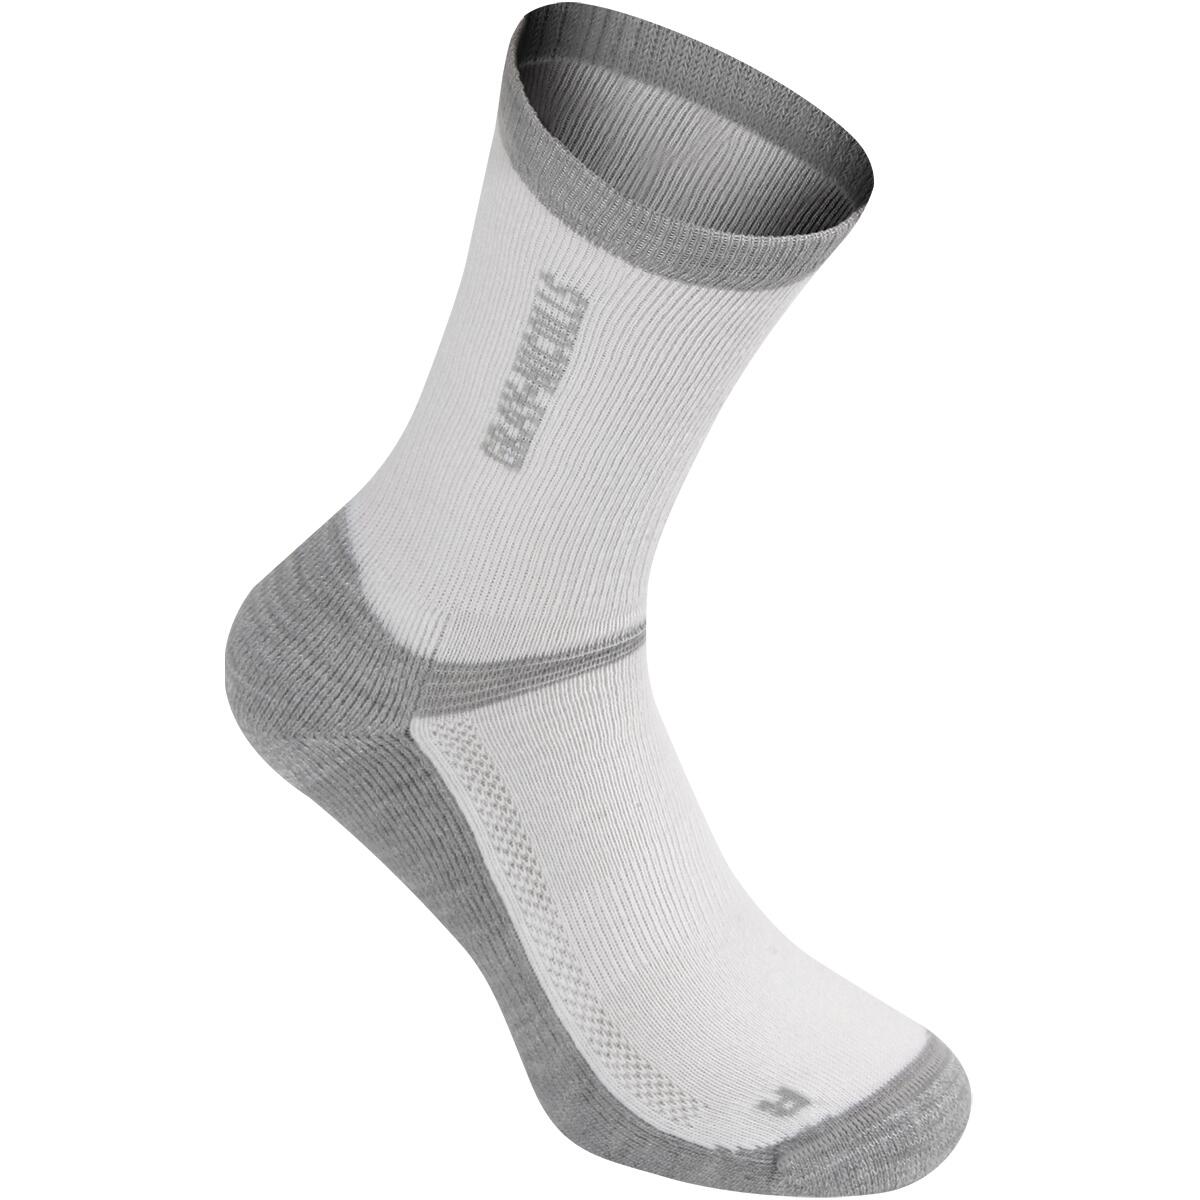 GRAY-NICOLLS Storm Socks,White